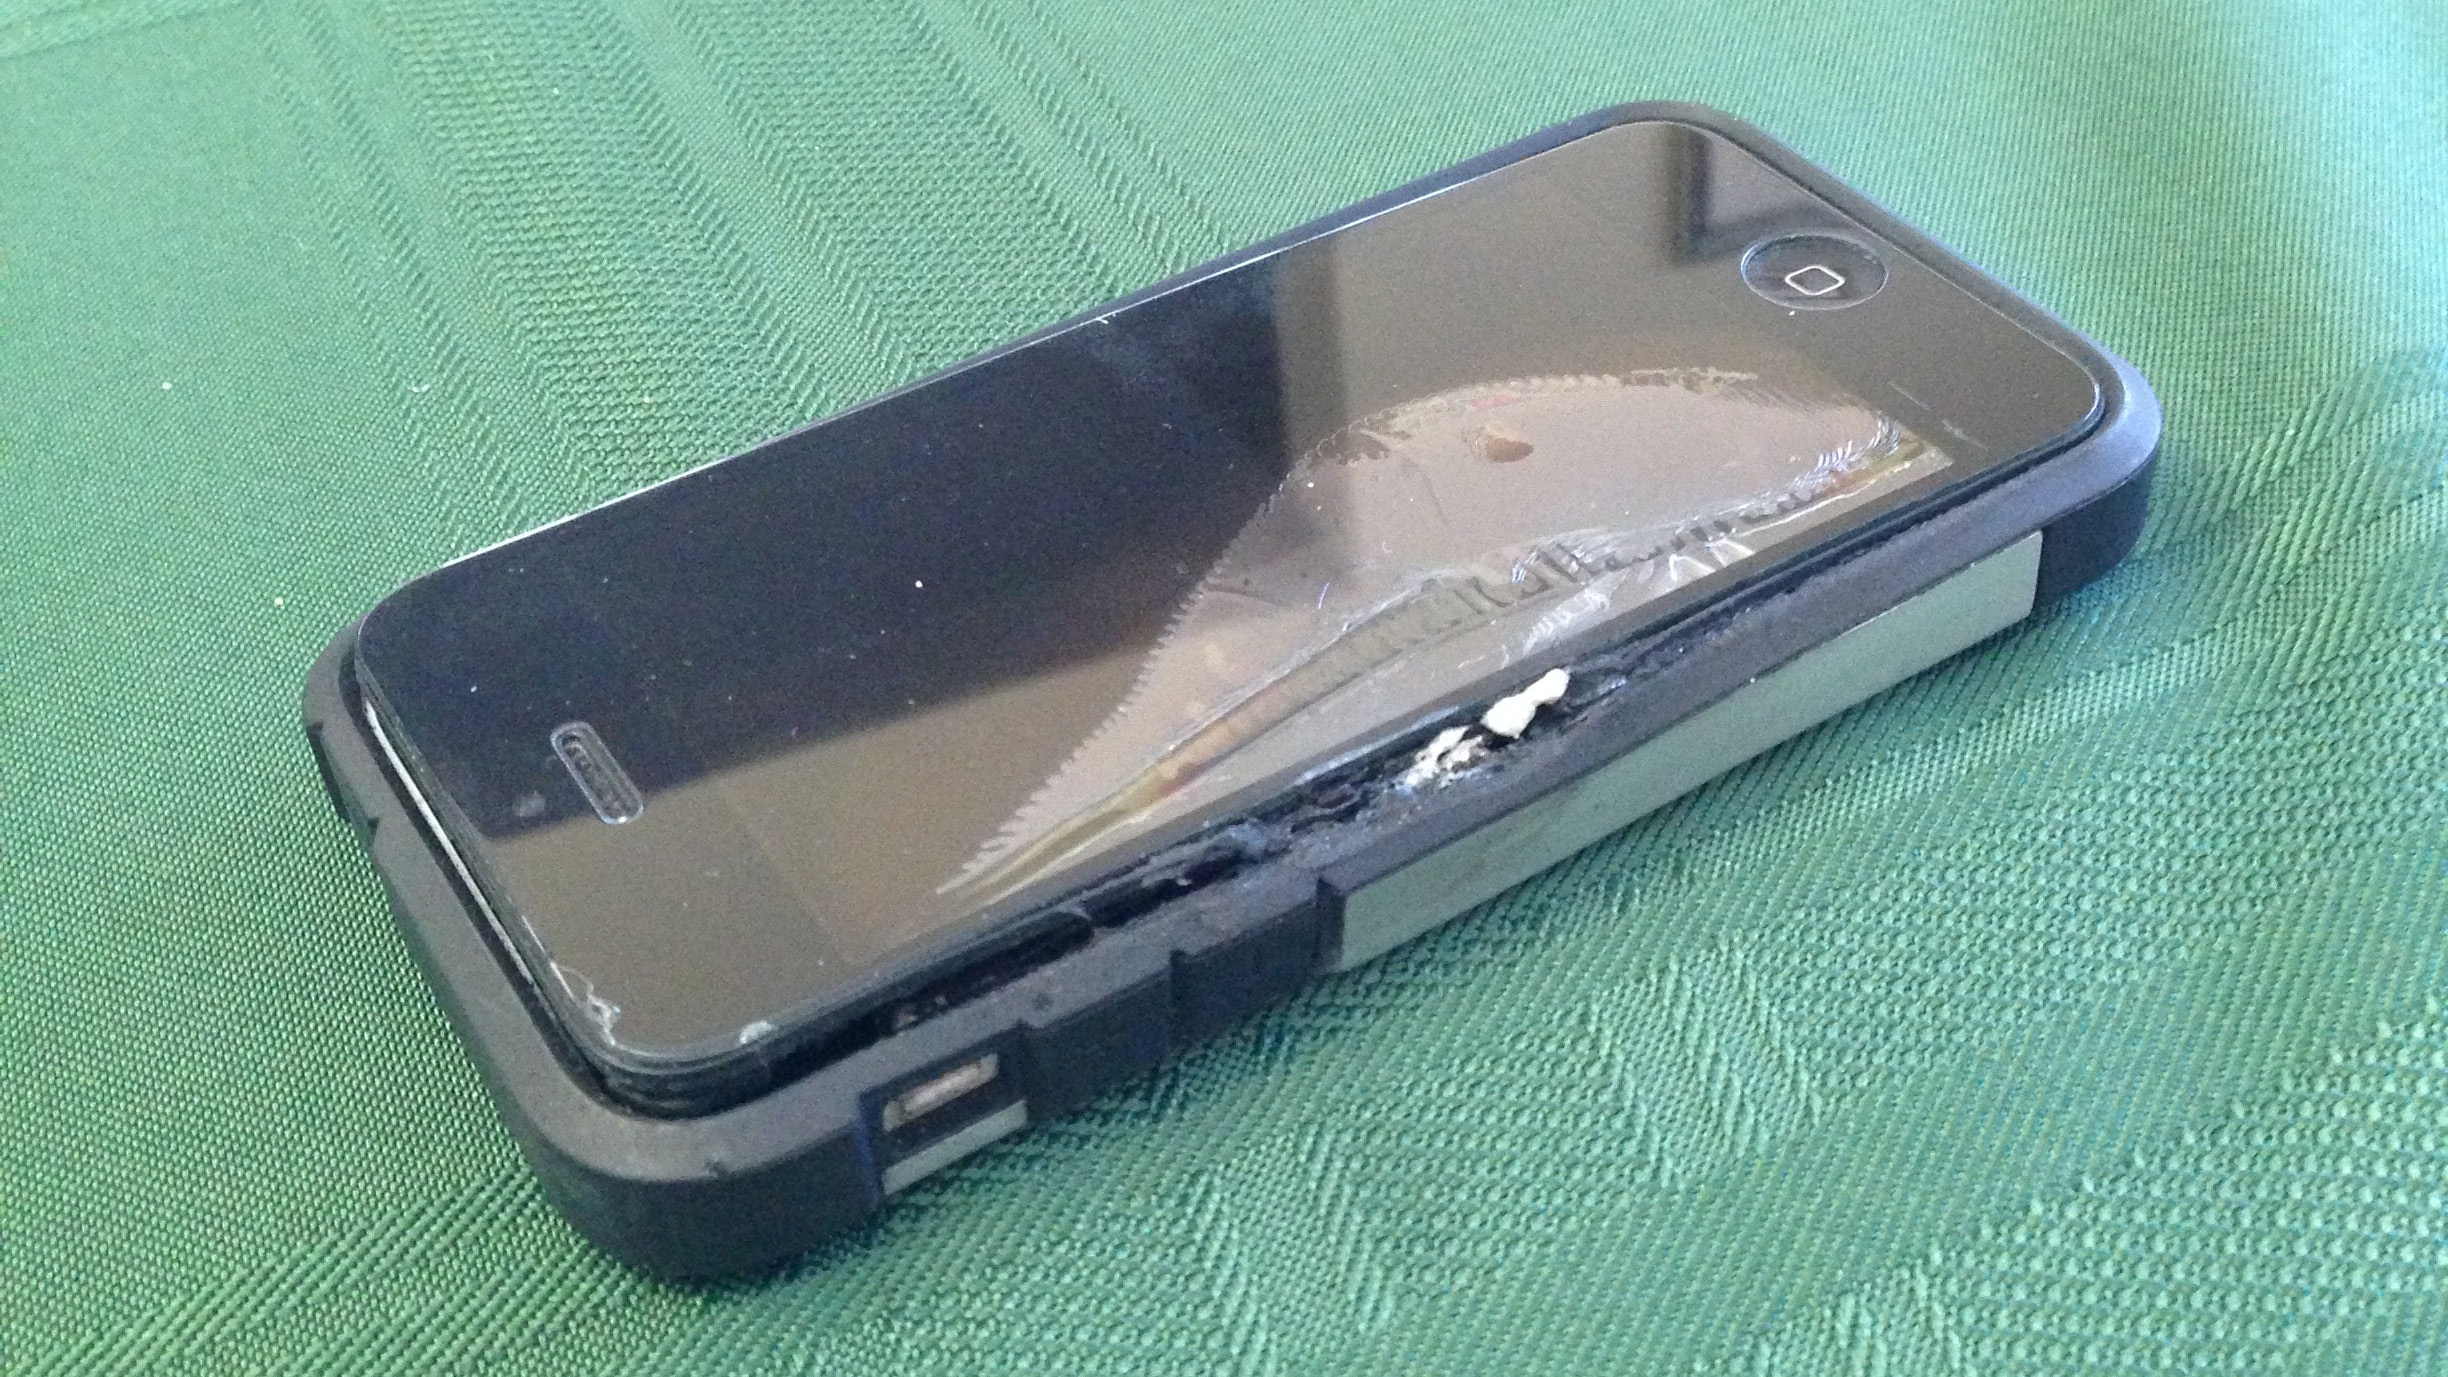 Man claims exploding iPhone left him with leg burns | CNN